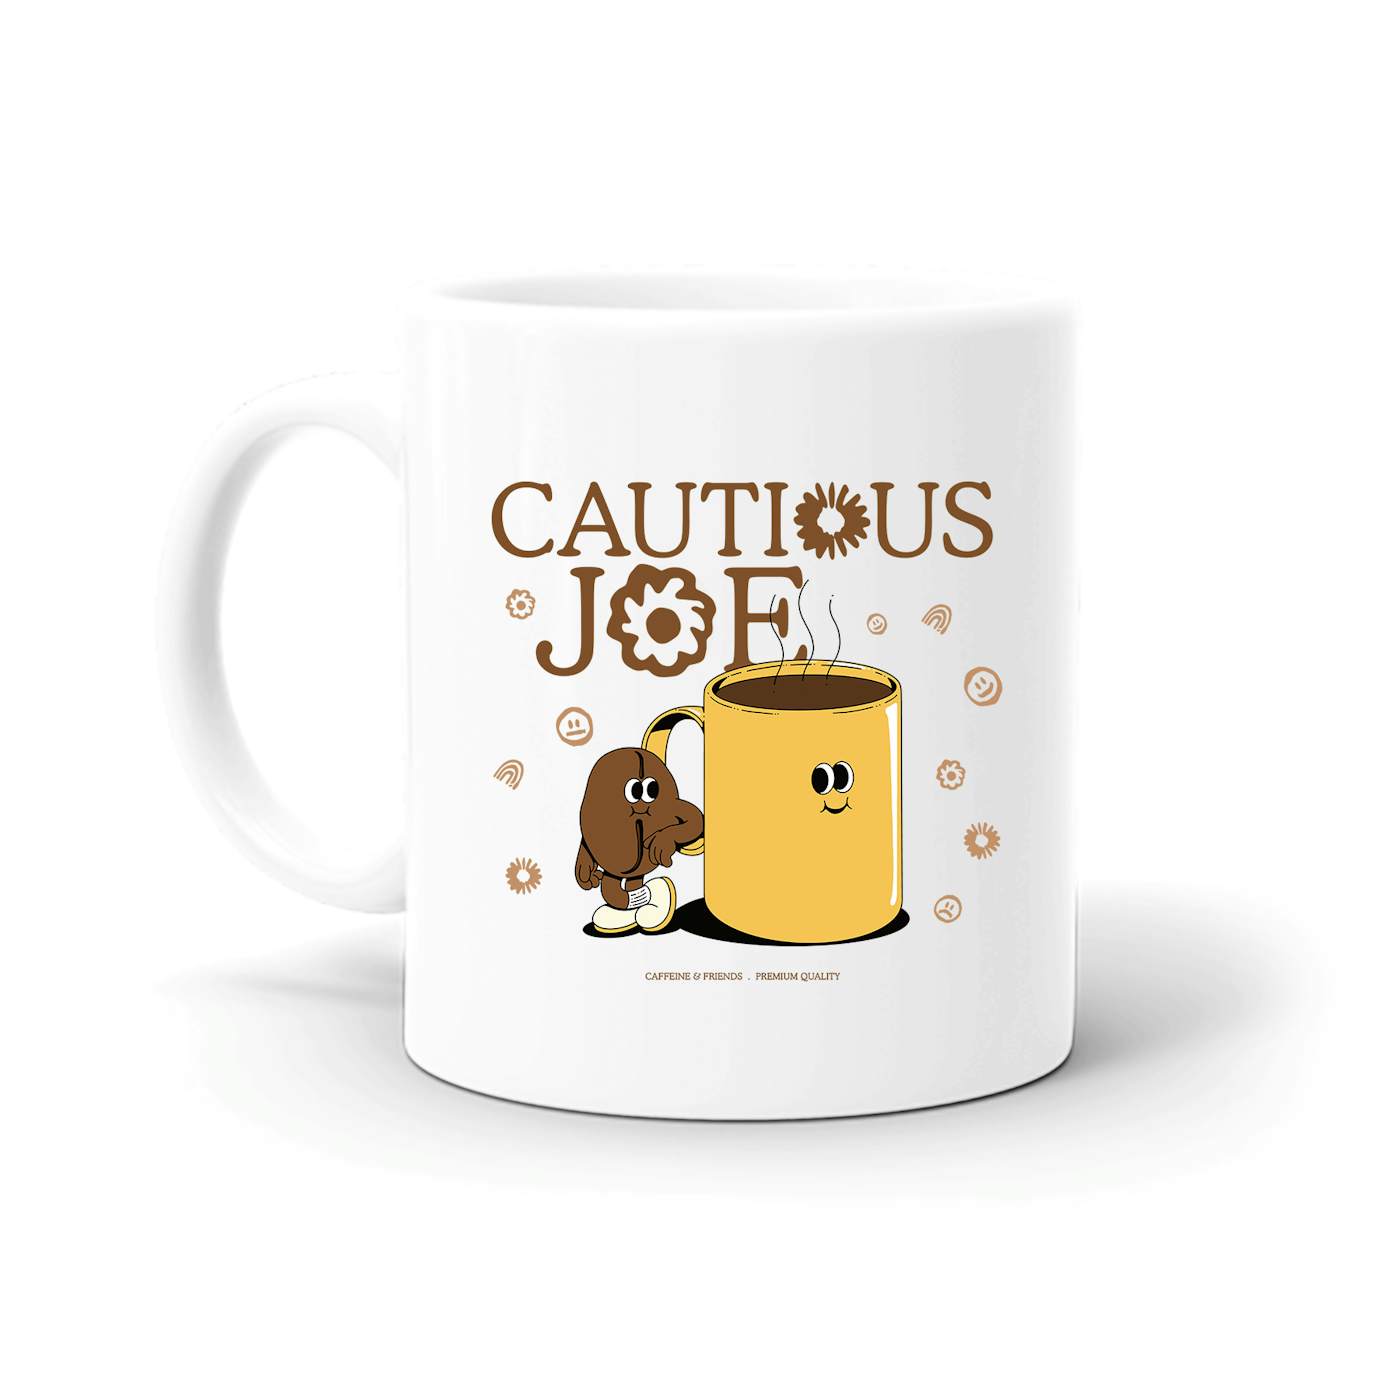 Cautious Clay Cautious Joe Coffee Mug